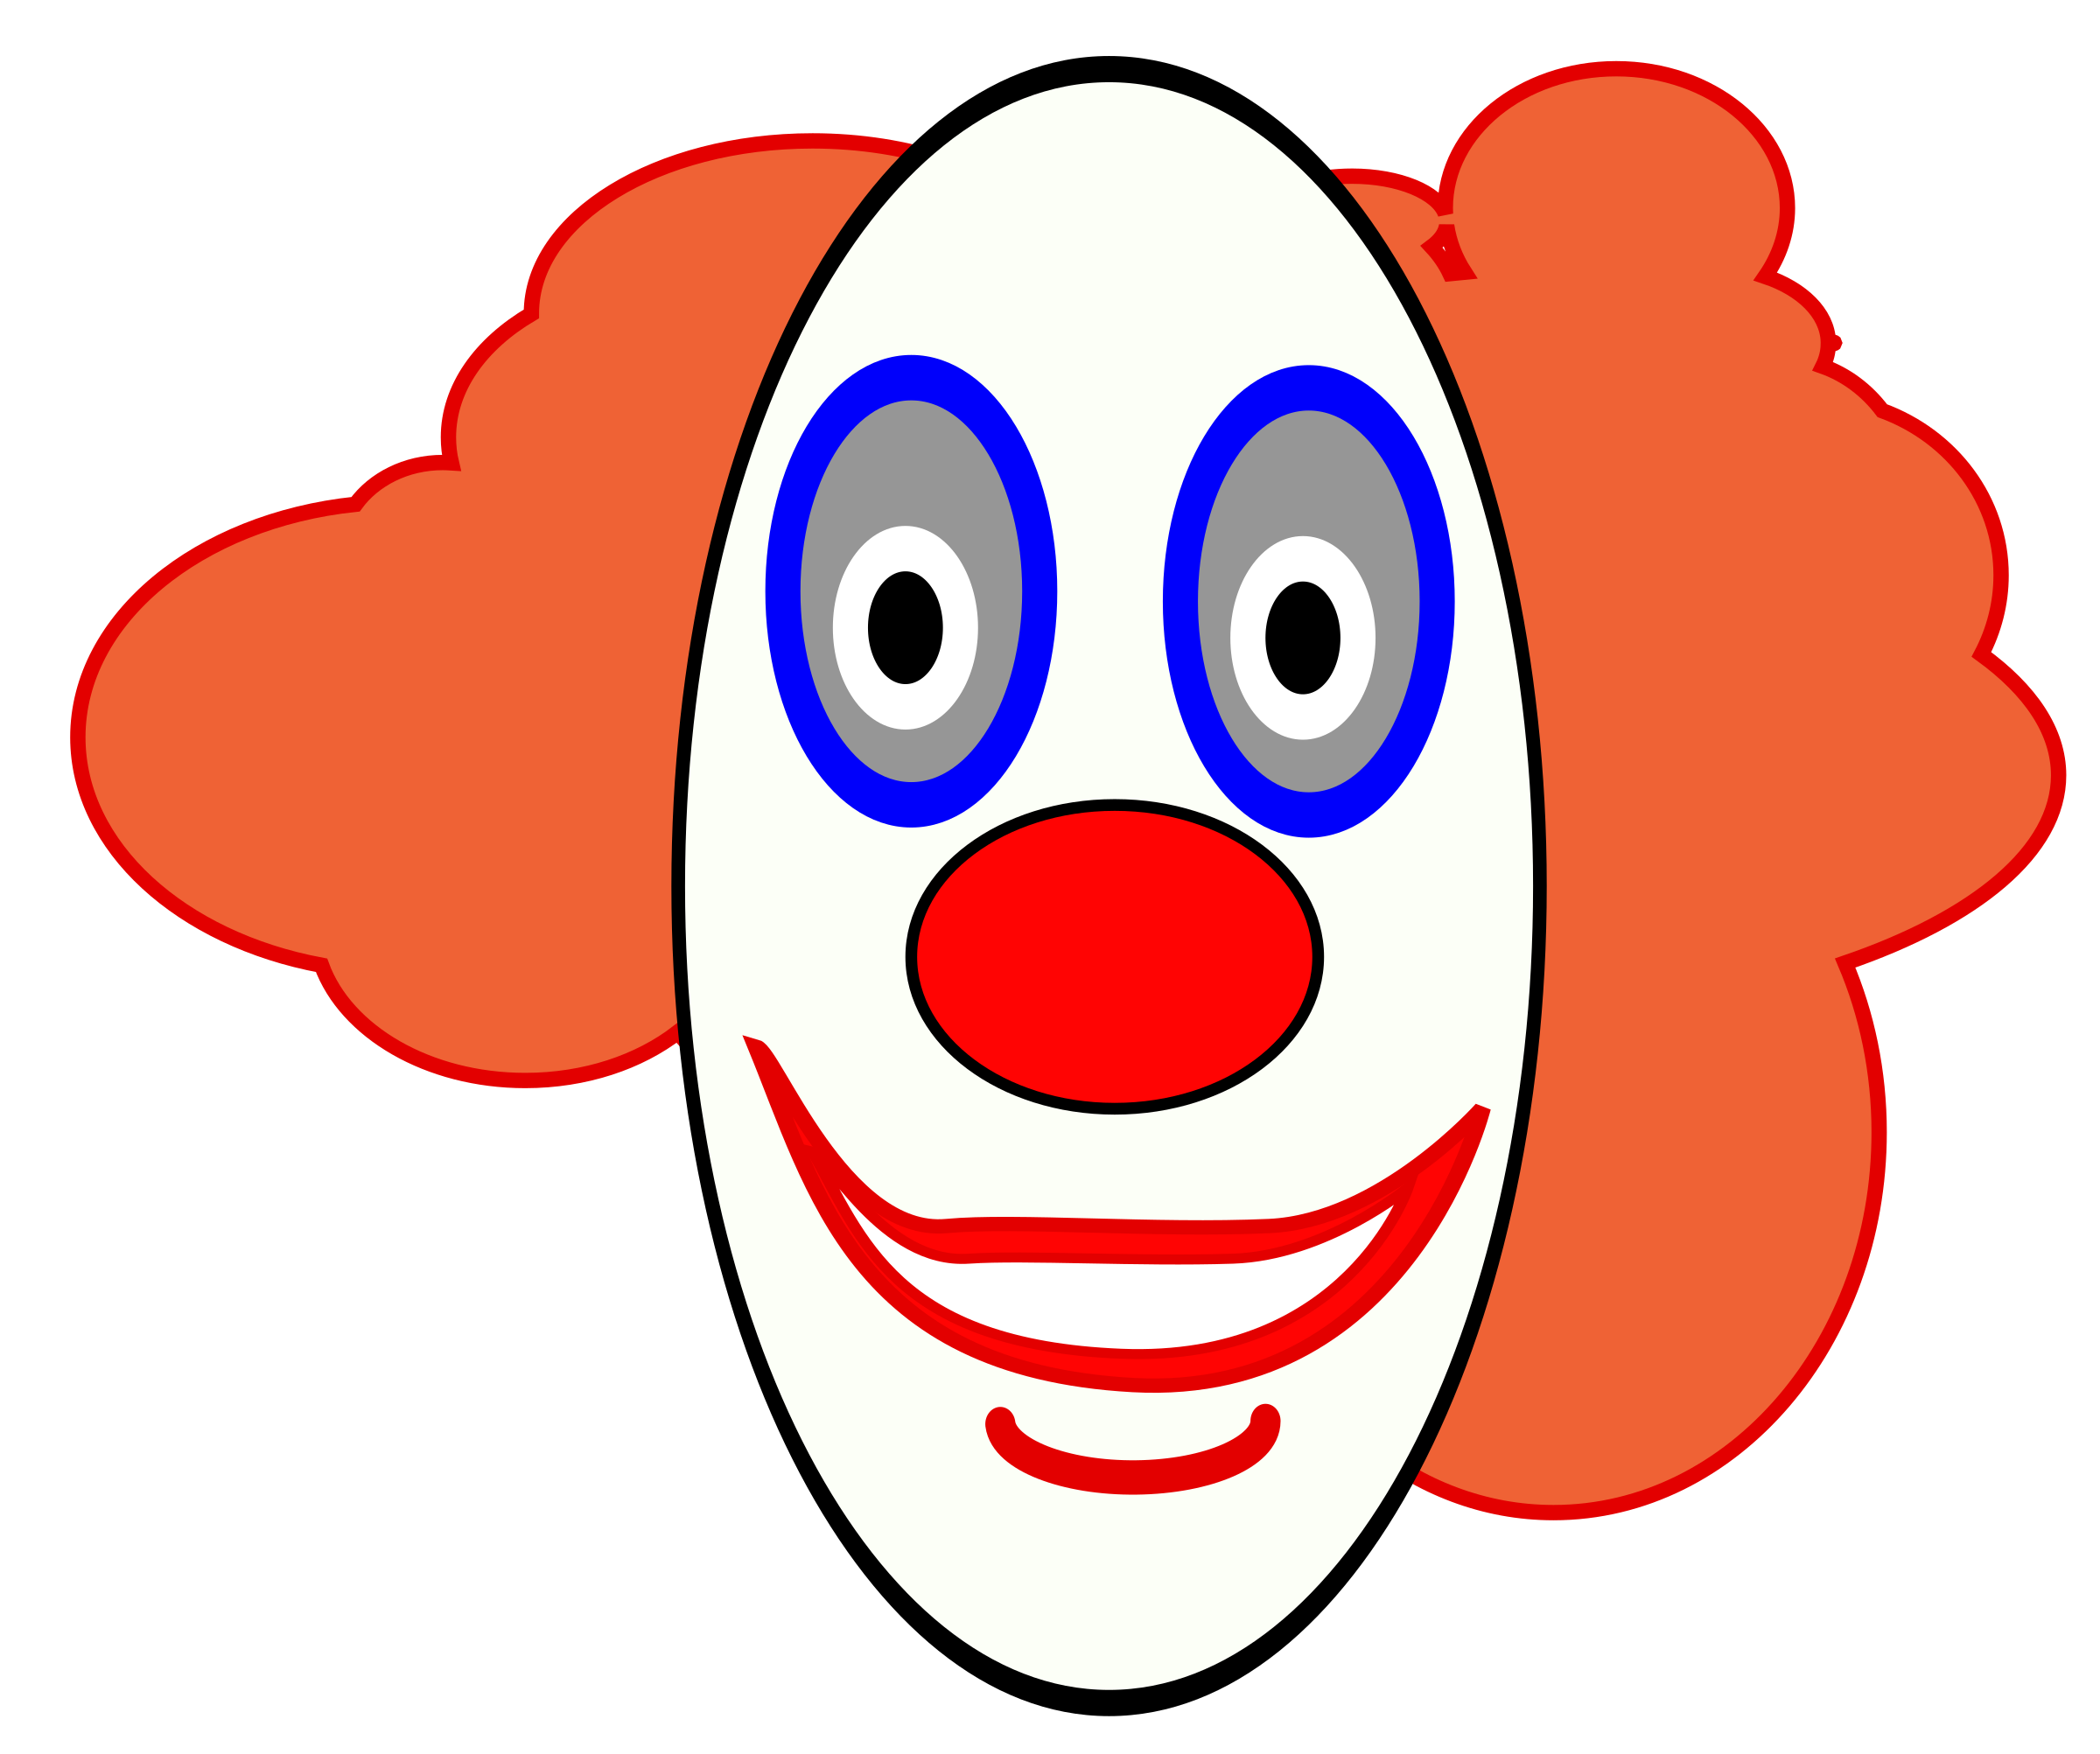 Big Image (Png) - Circus Joker Face, Transparent background PNG HD thumbnail